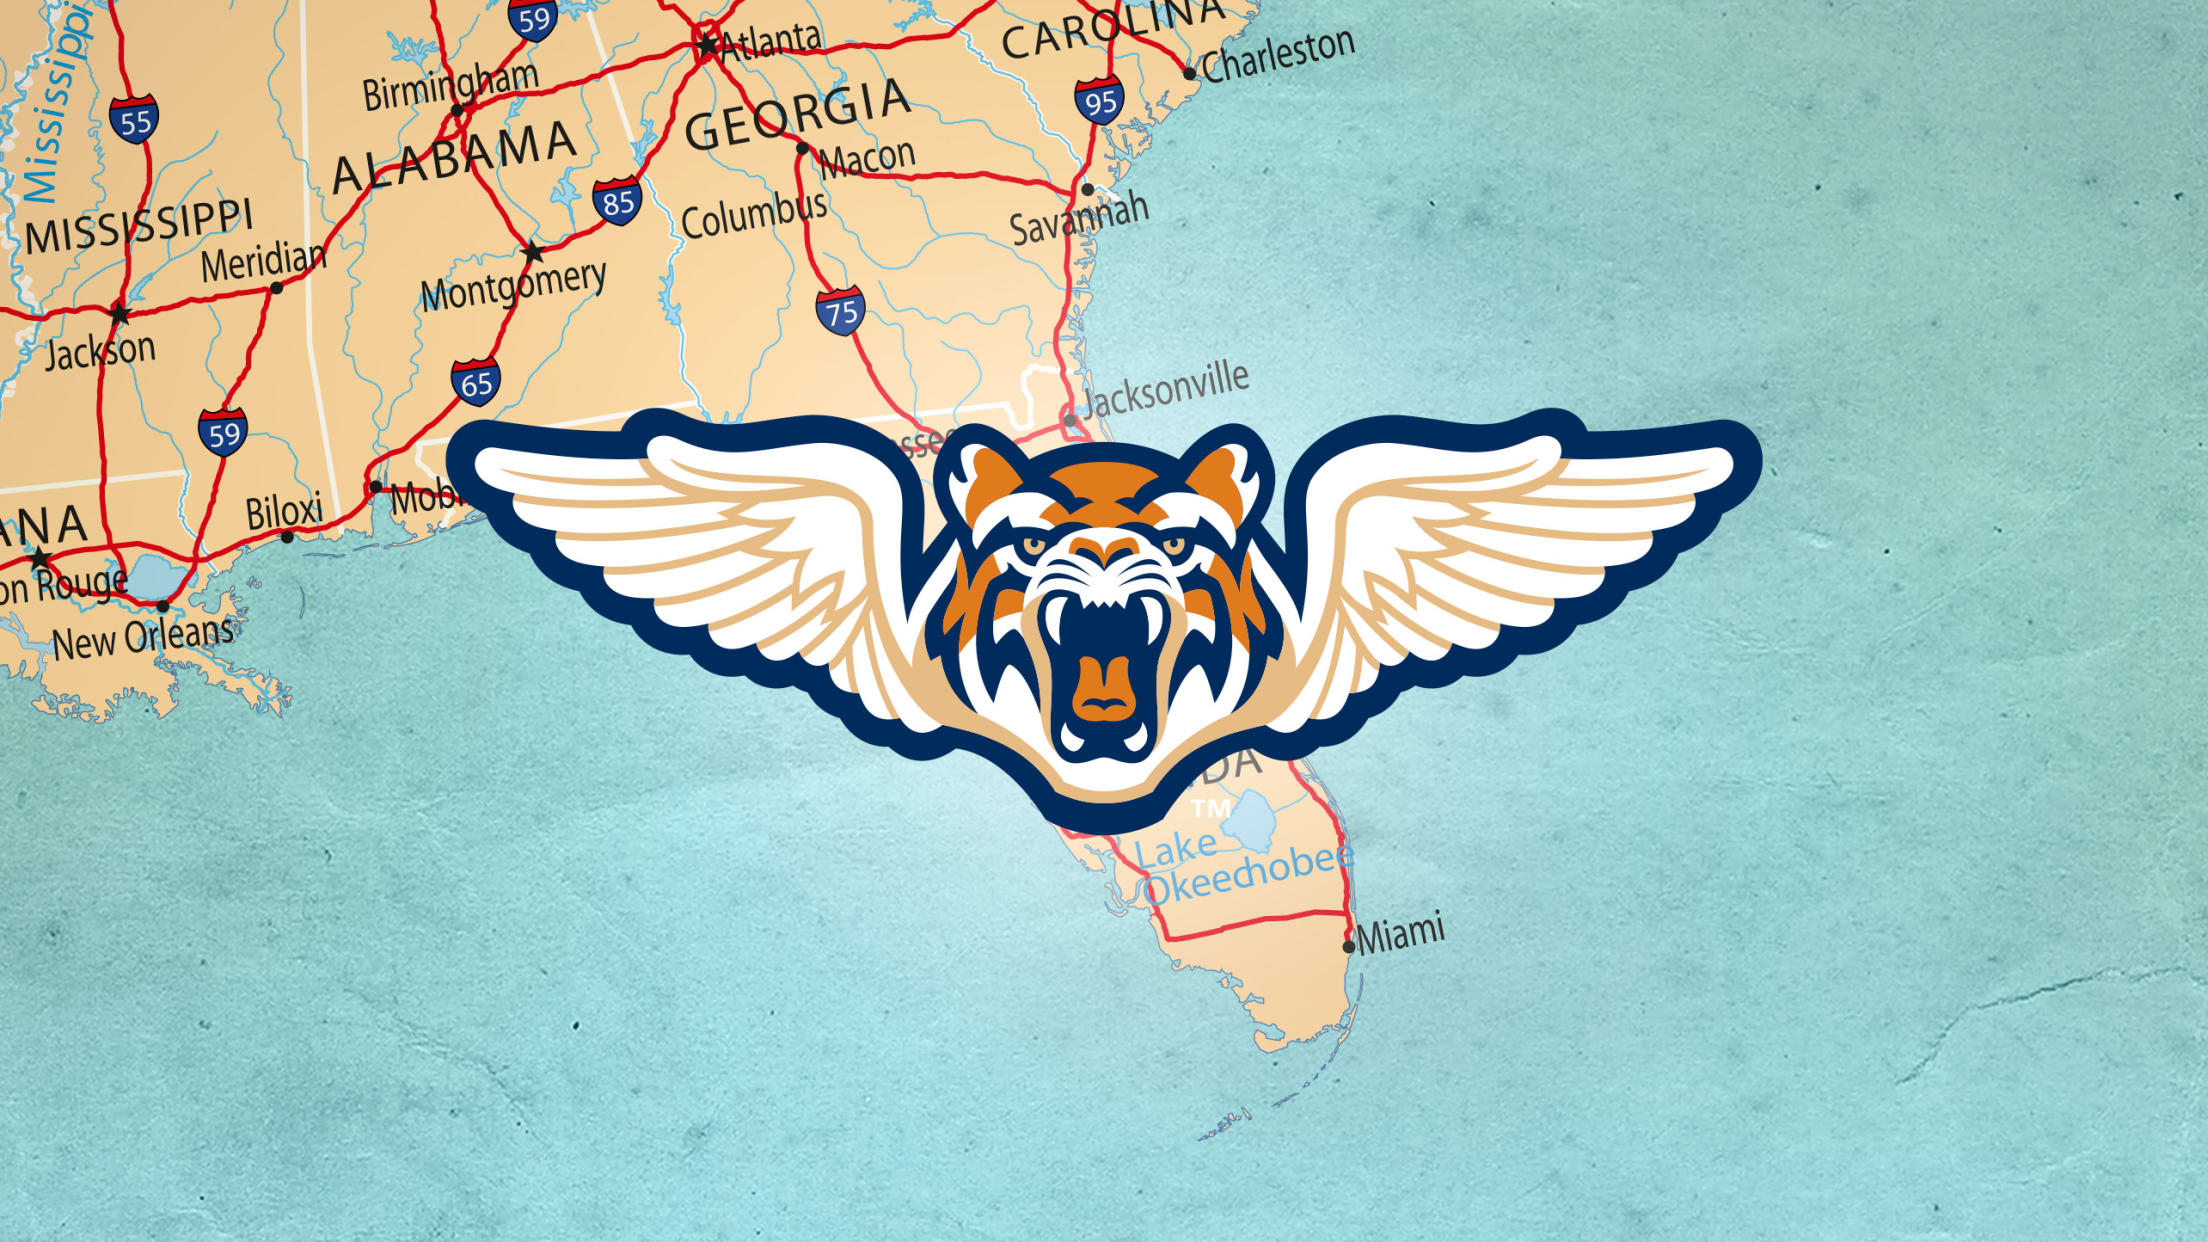 Event Feedback: Tampa Tarpons vs. Lakeland Flying Tigers - MiLB